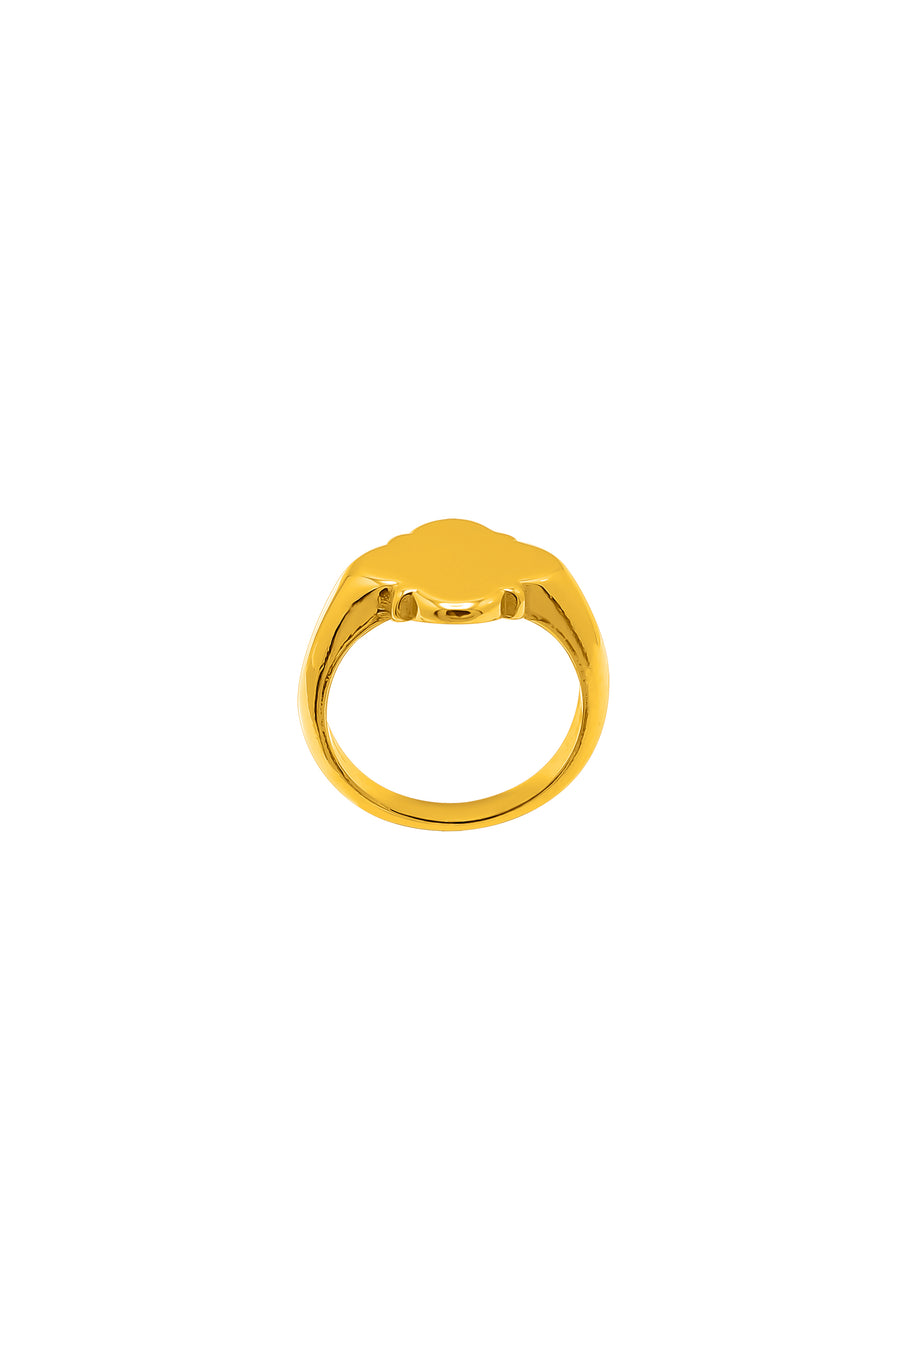 Olivia's Ring